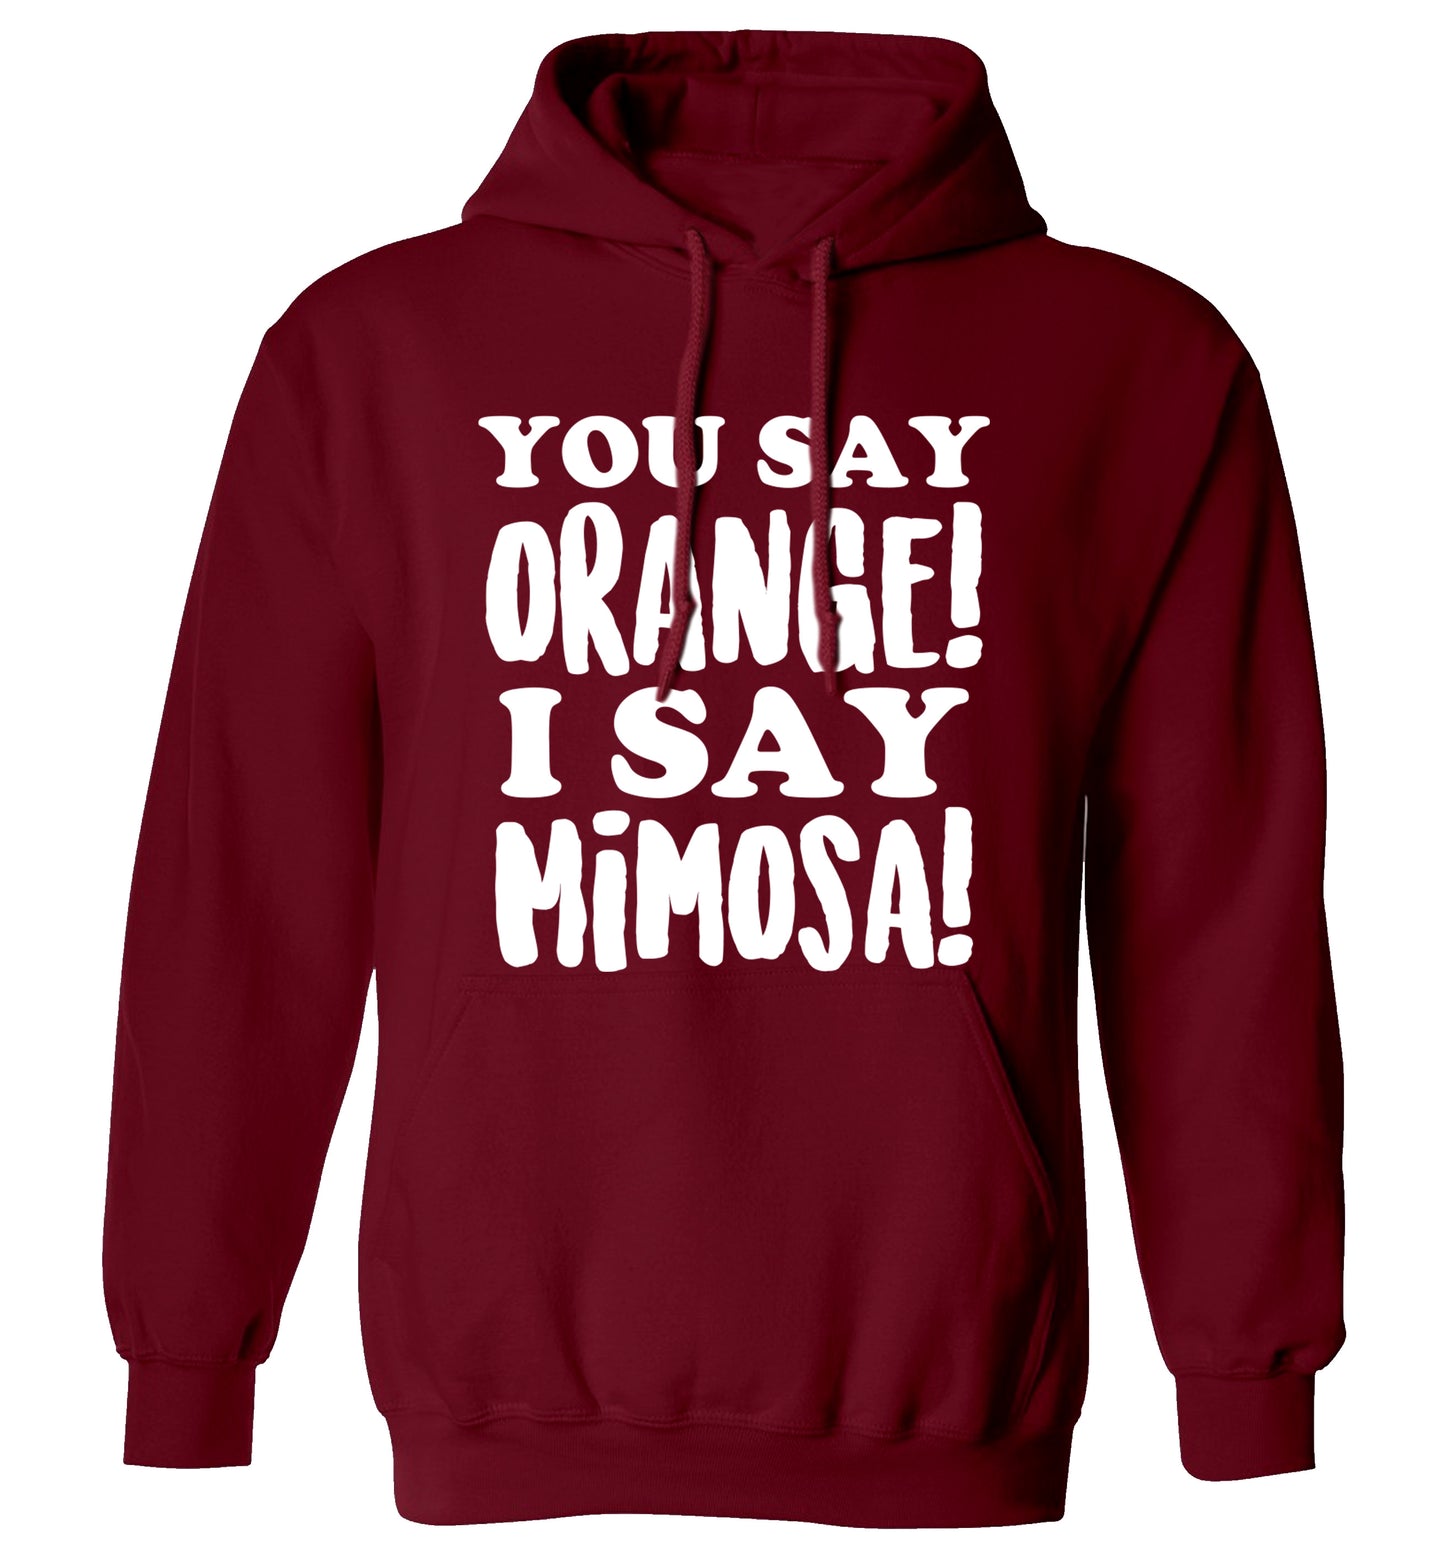 You say orange I say mimosa! adults unisex maroon hoodie 2XL